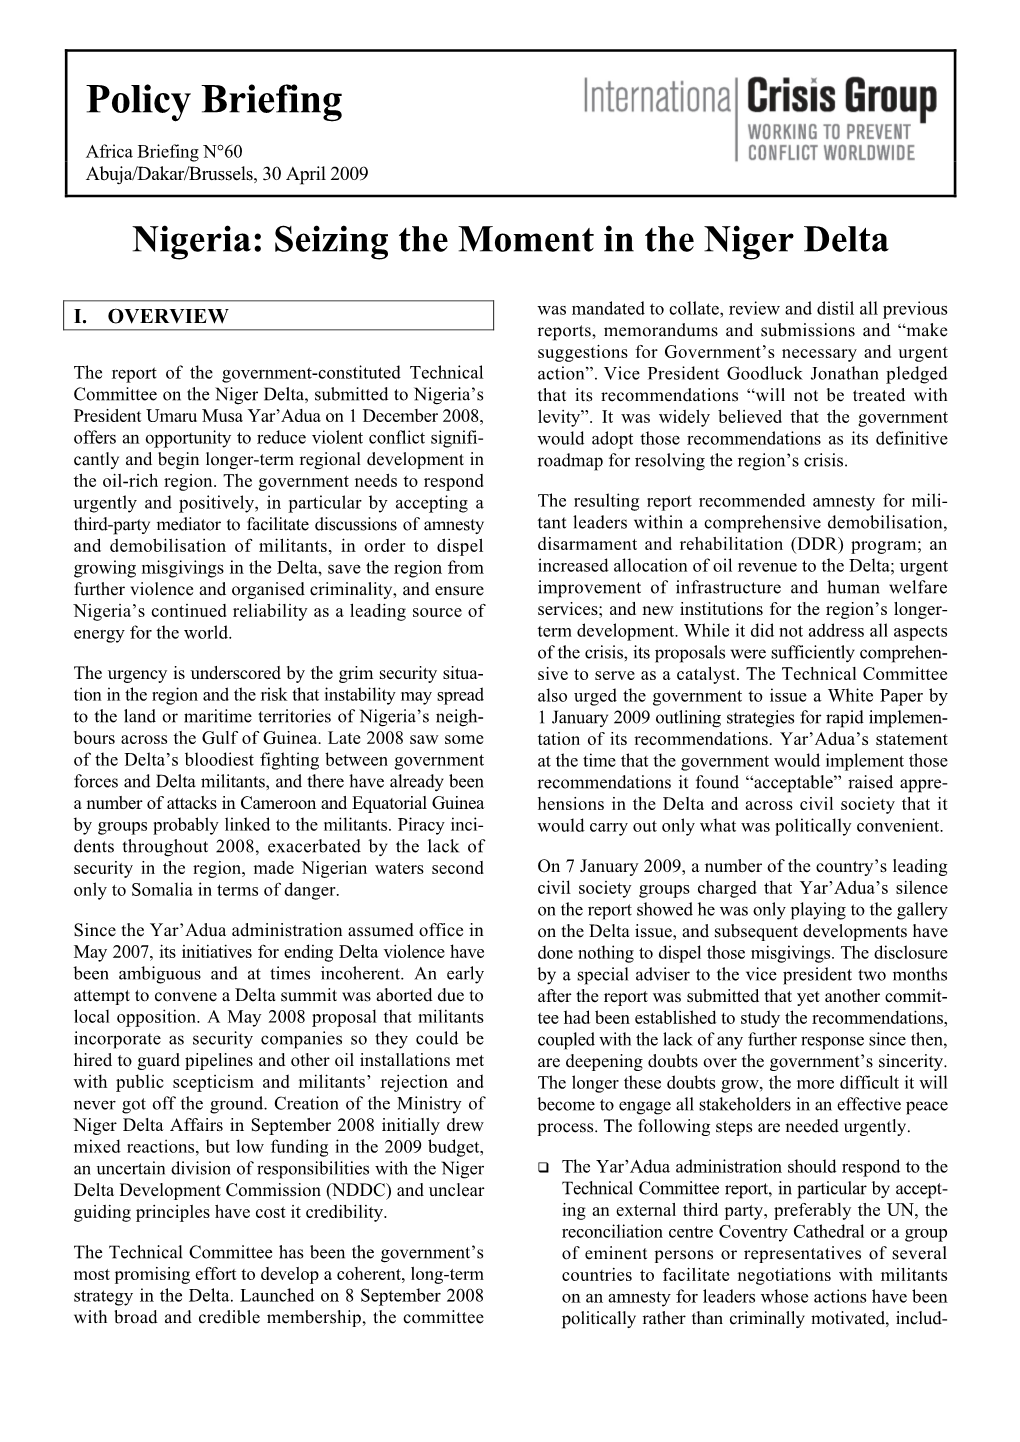 Nigeria: Seizing the Moment in the Niger Delta